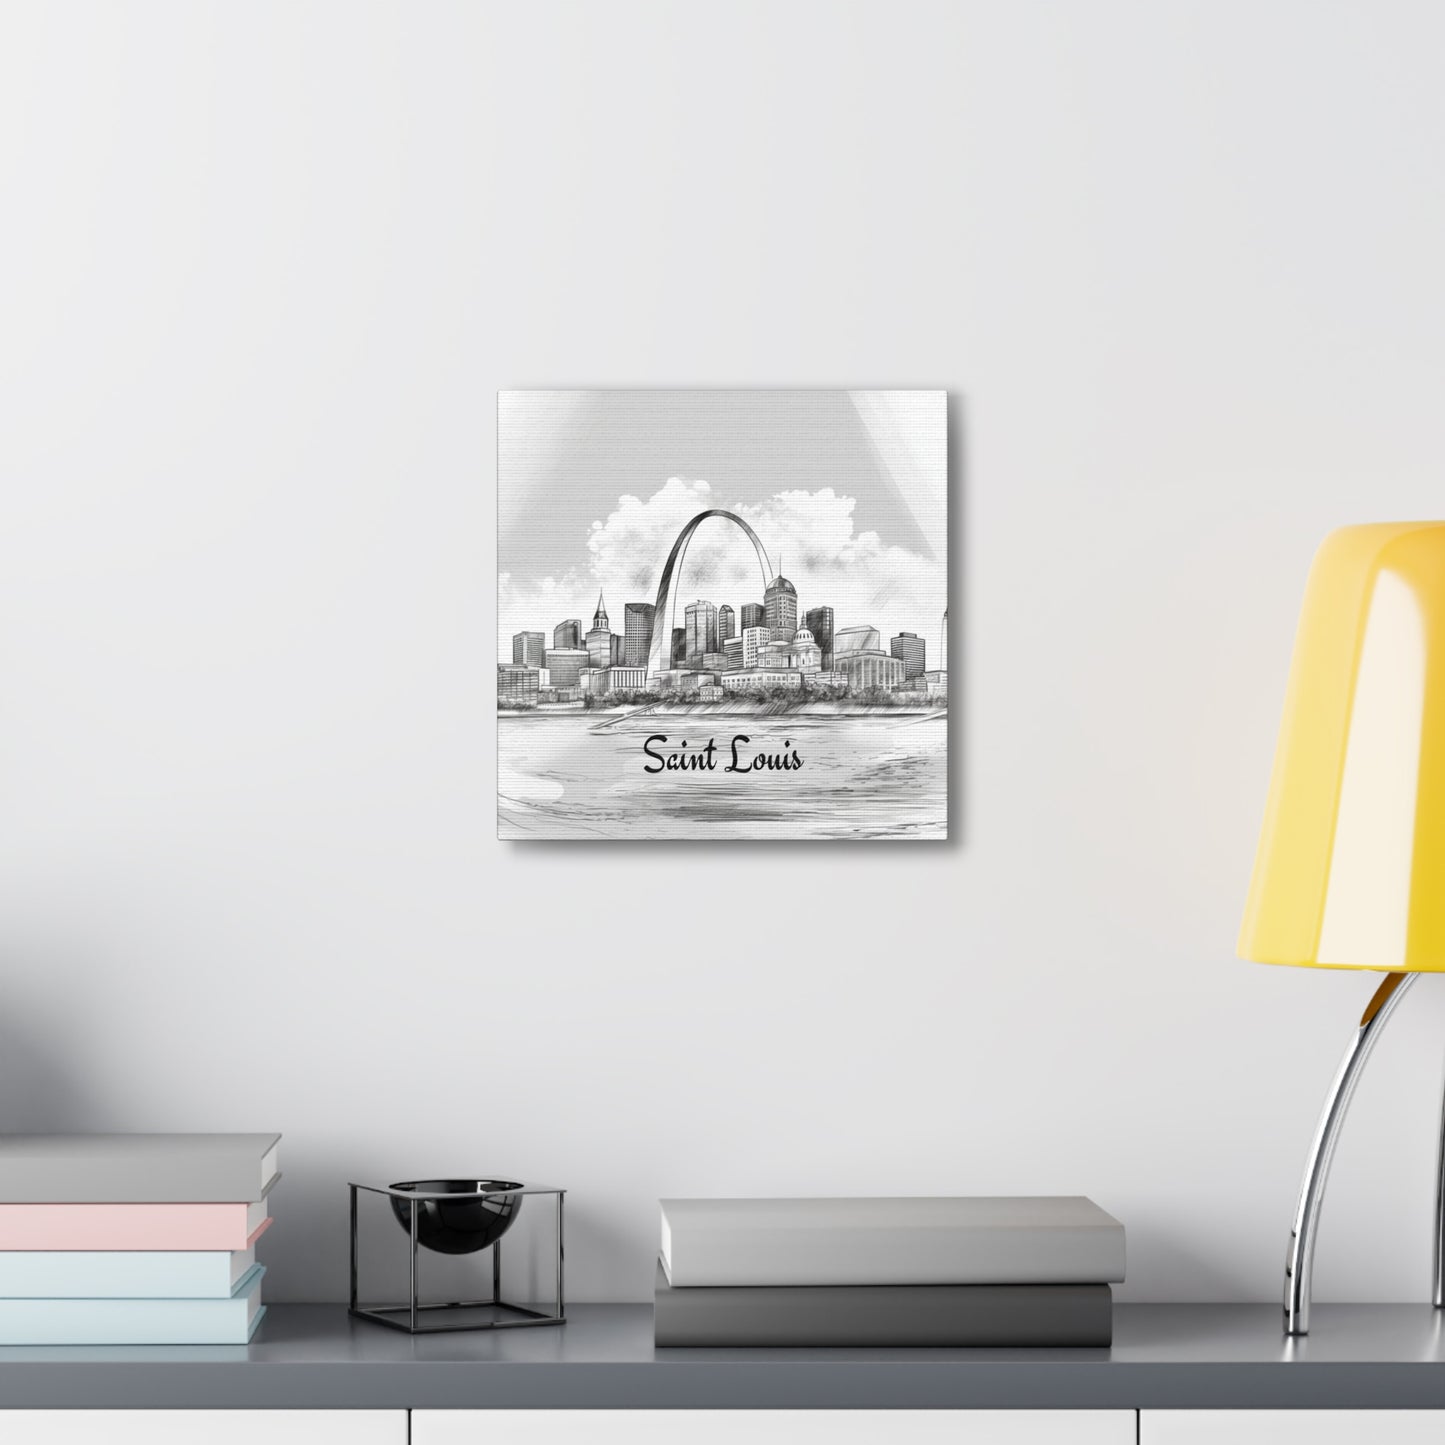 Indoor decorative canvas featuring Saint Louis, Missouri skyline